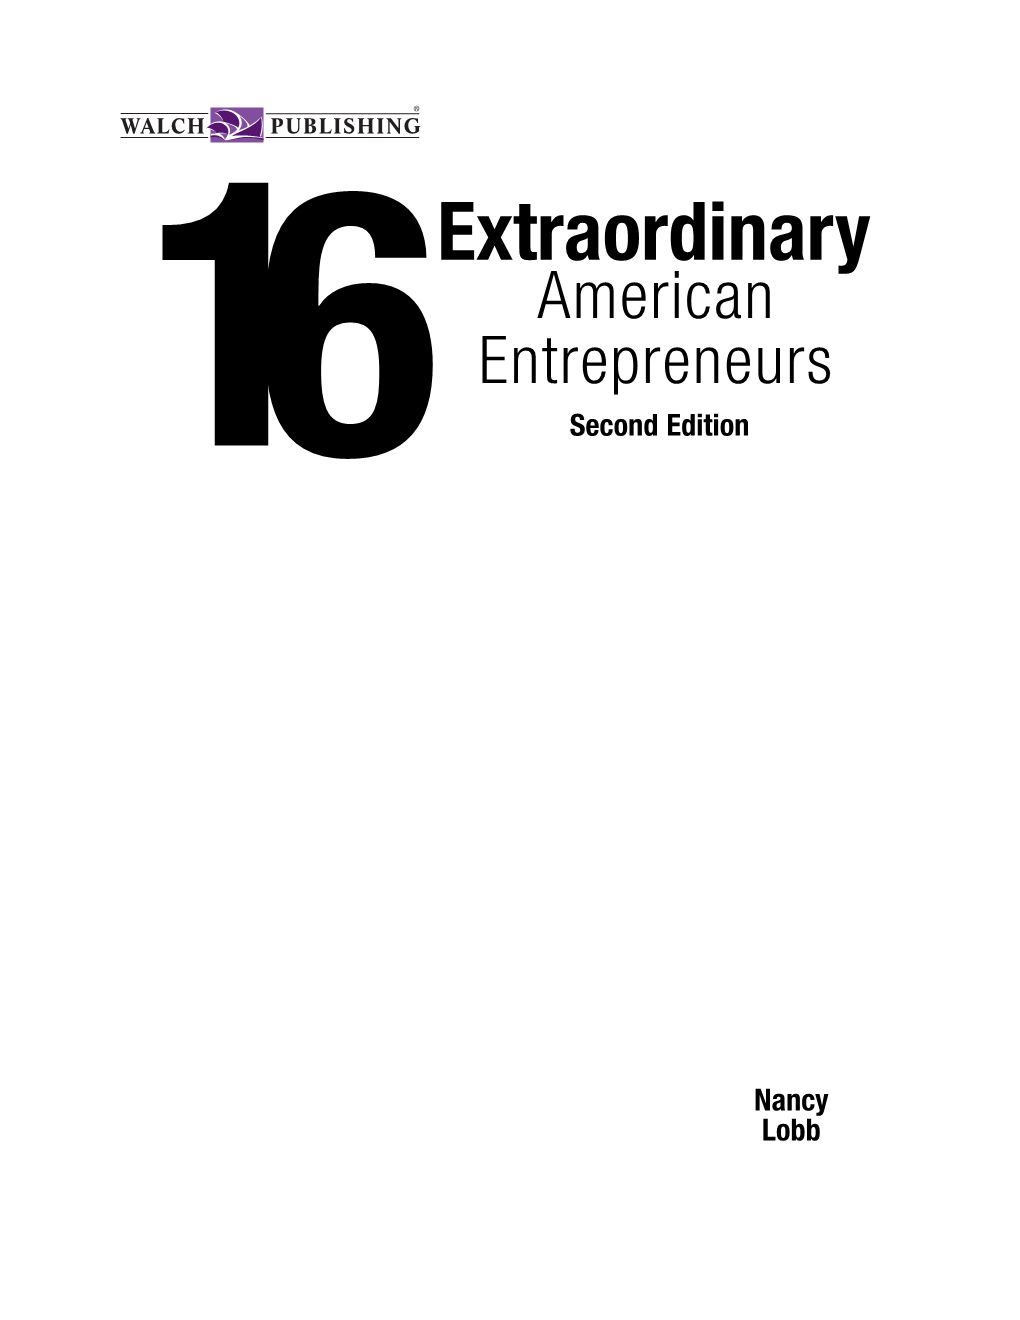 16 Extra.Entrepreneurs